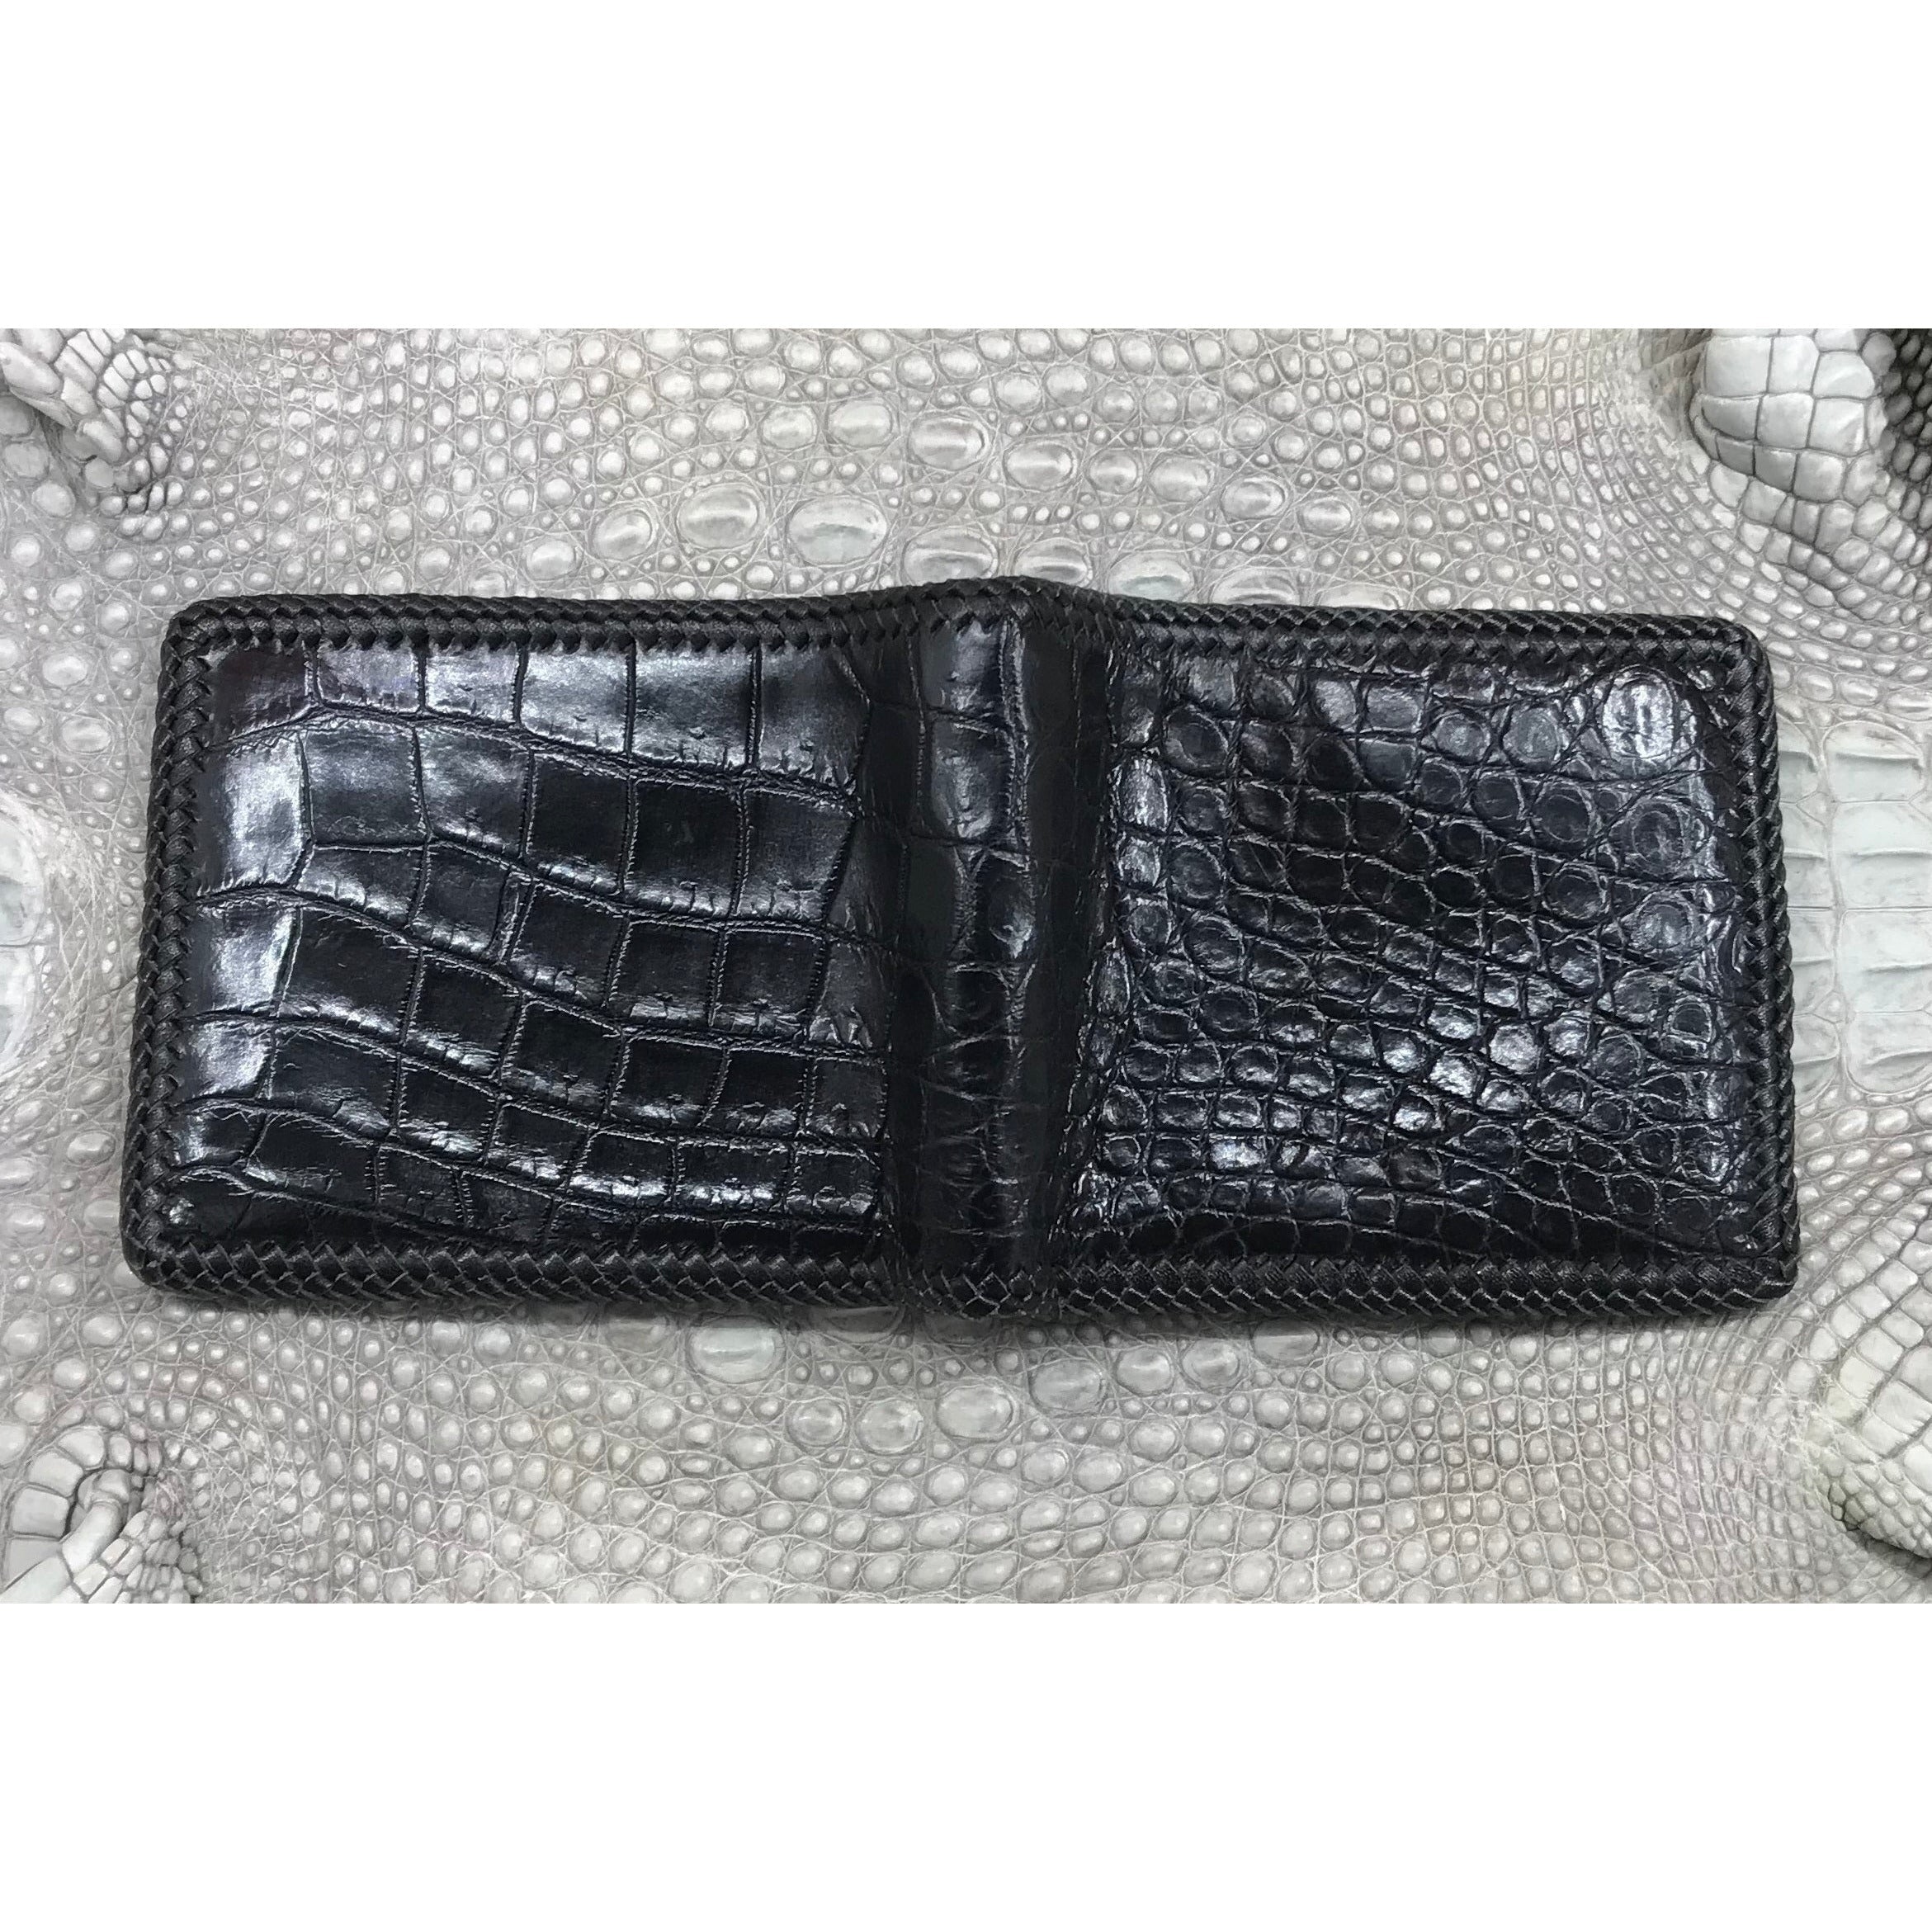 Black Alligator Skin Bifold Wallet For Men | Handmade Crocodile Leather Wallet RFID Blocking | VL5662 - Vinacreations